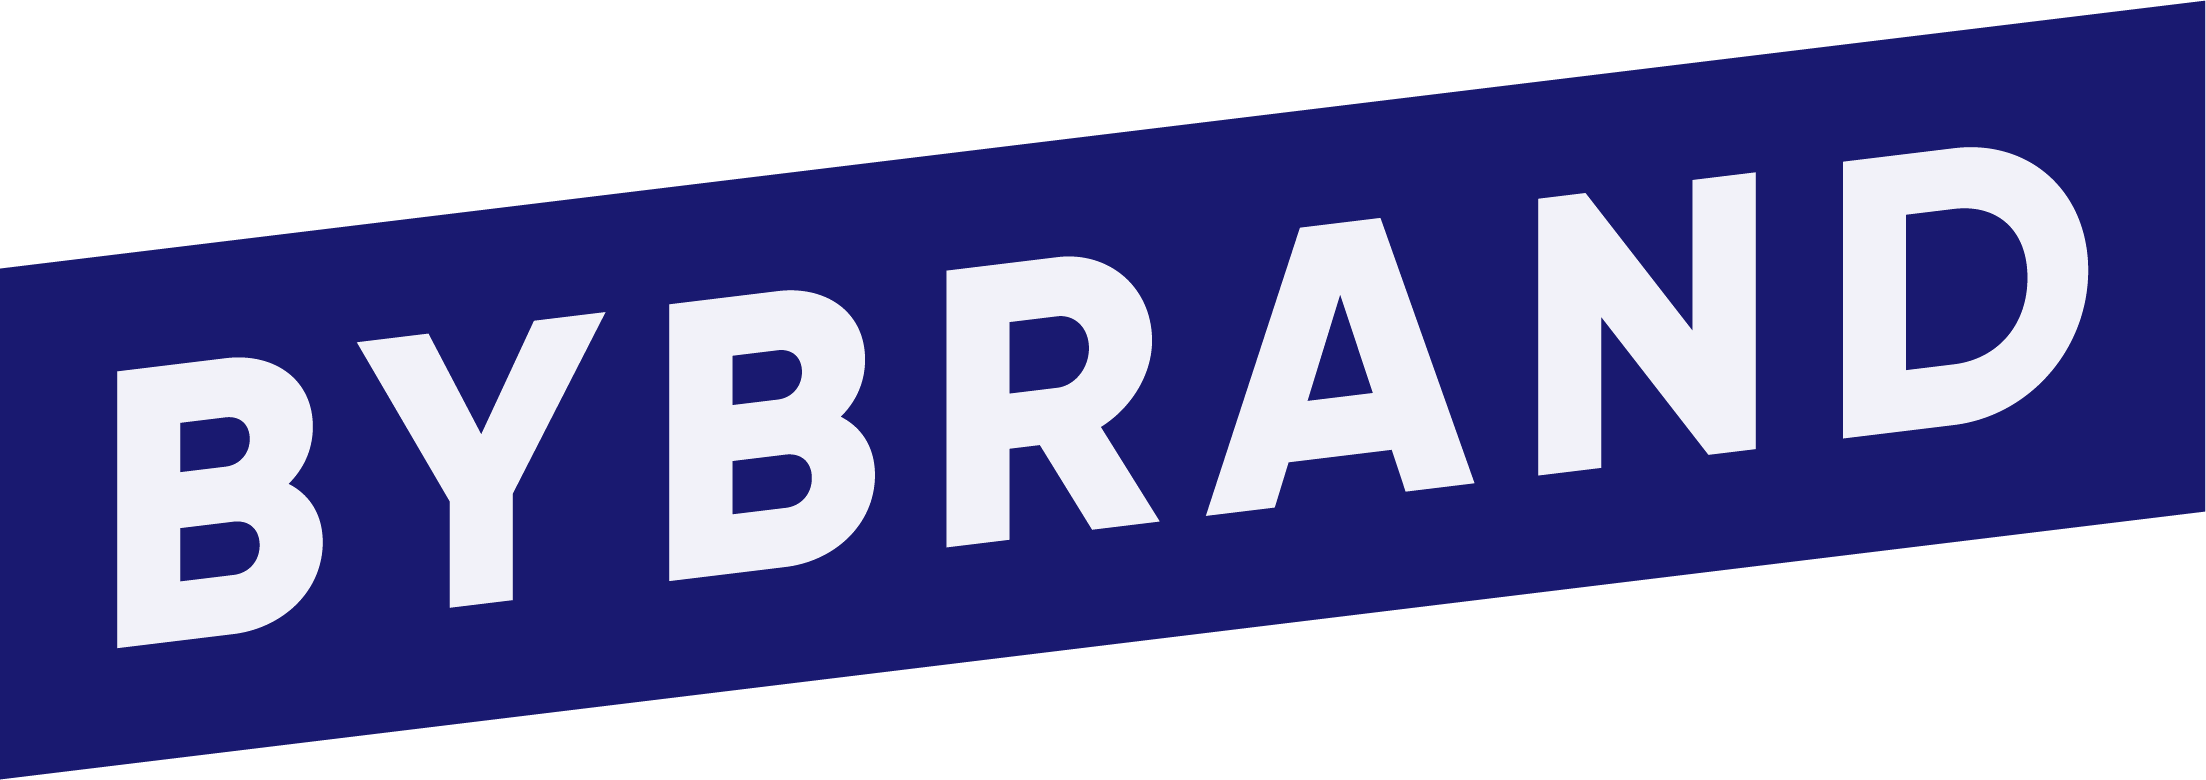 Bybrand official logo